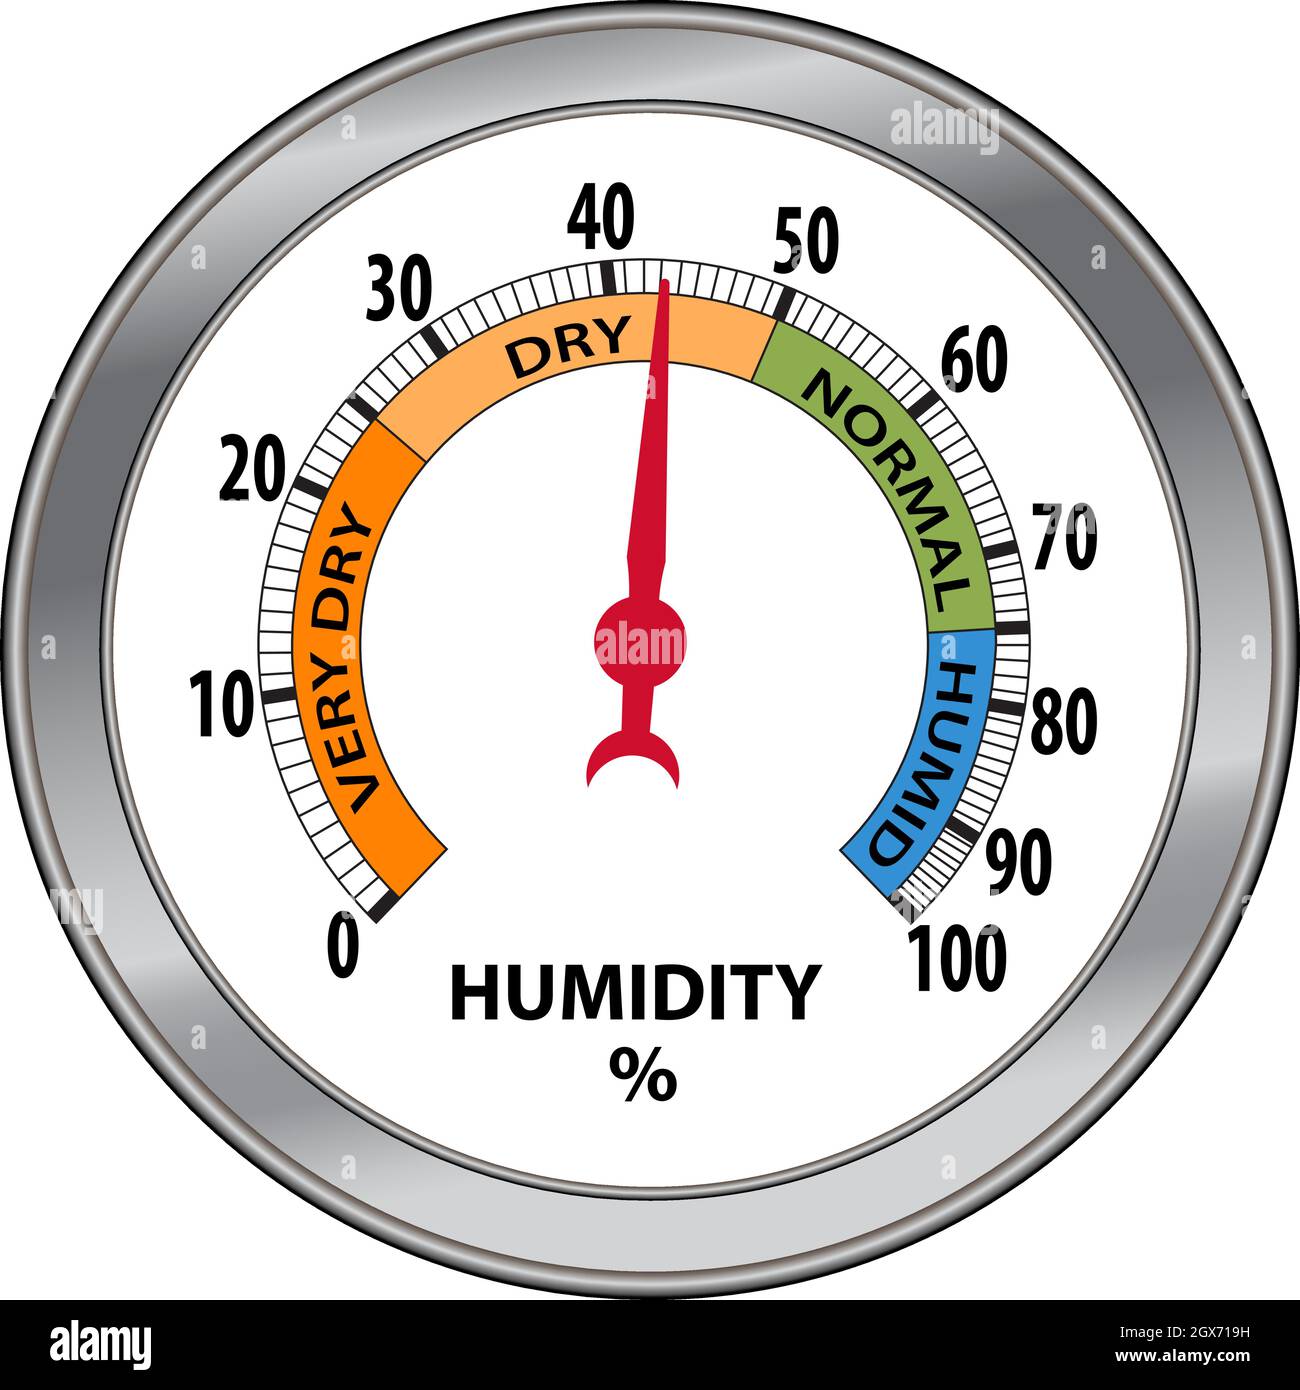 https://c8.alamy.com/comp/2GX719H/analog-humidity-hygrometer-vector-illustration-2GX719H.jpg